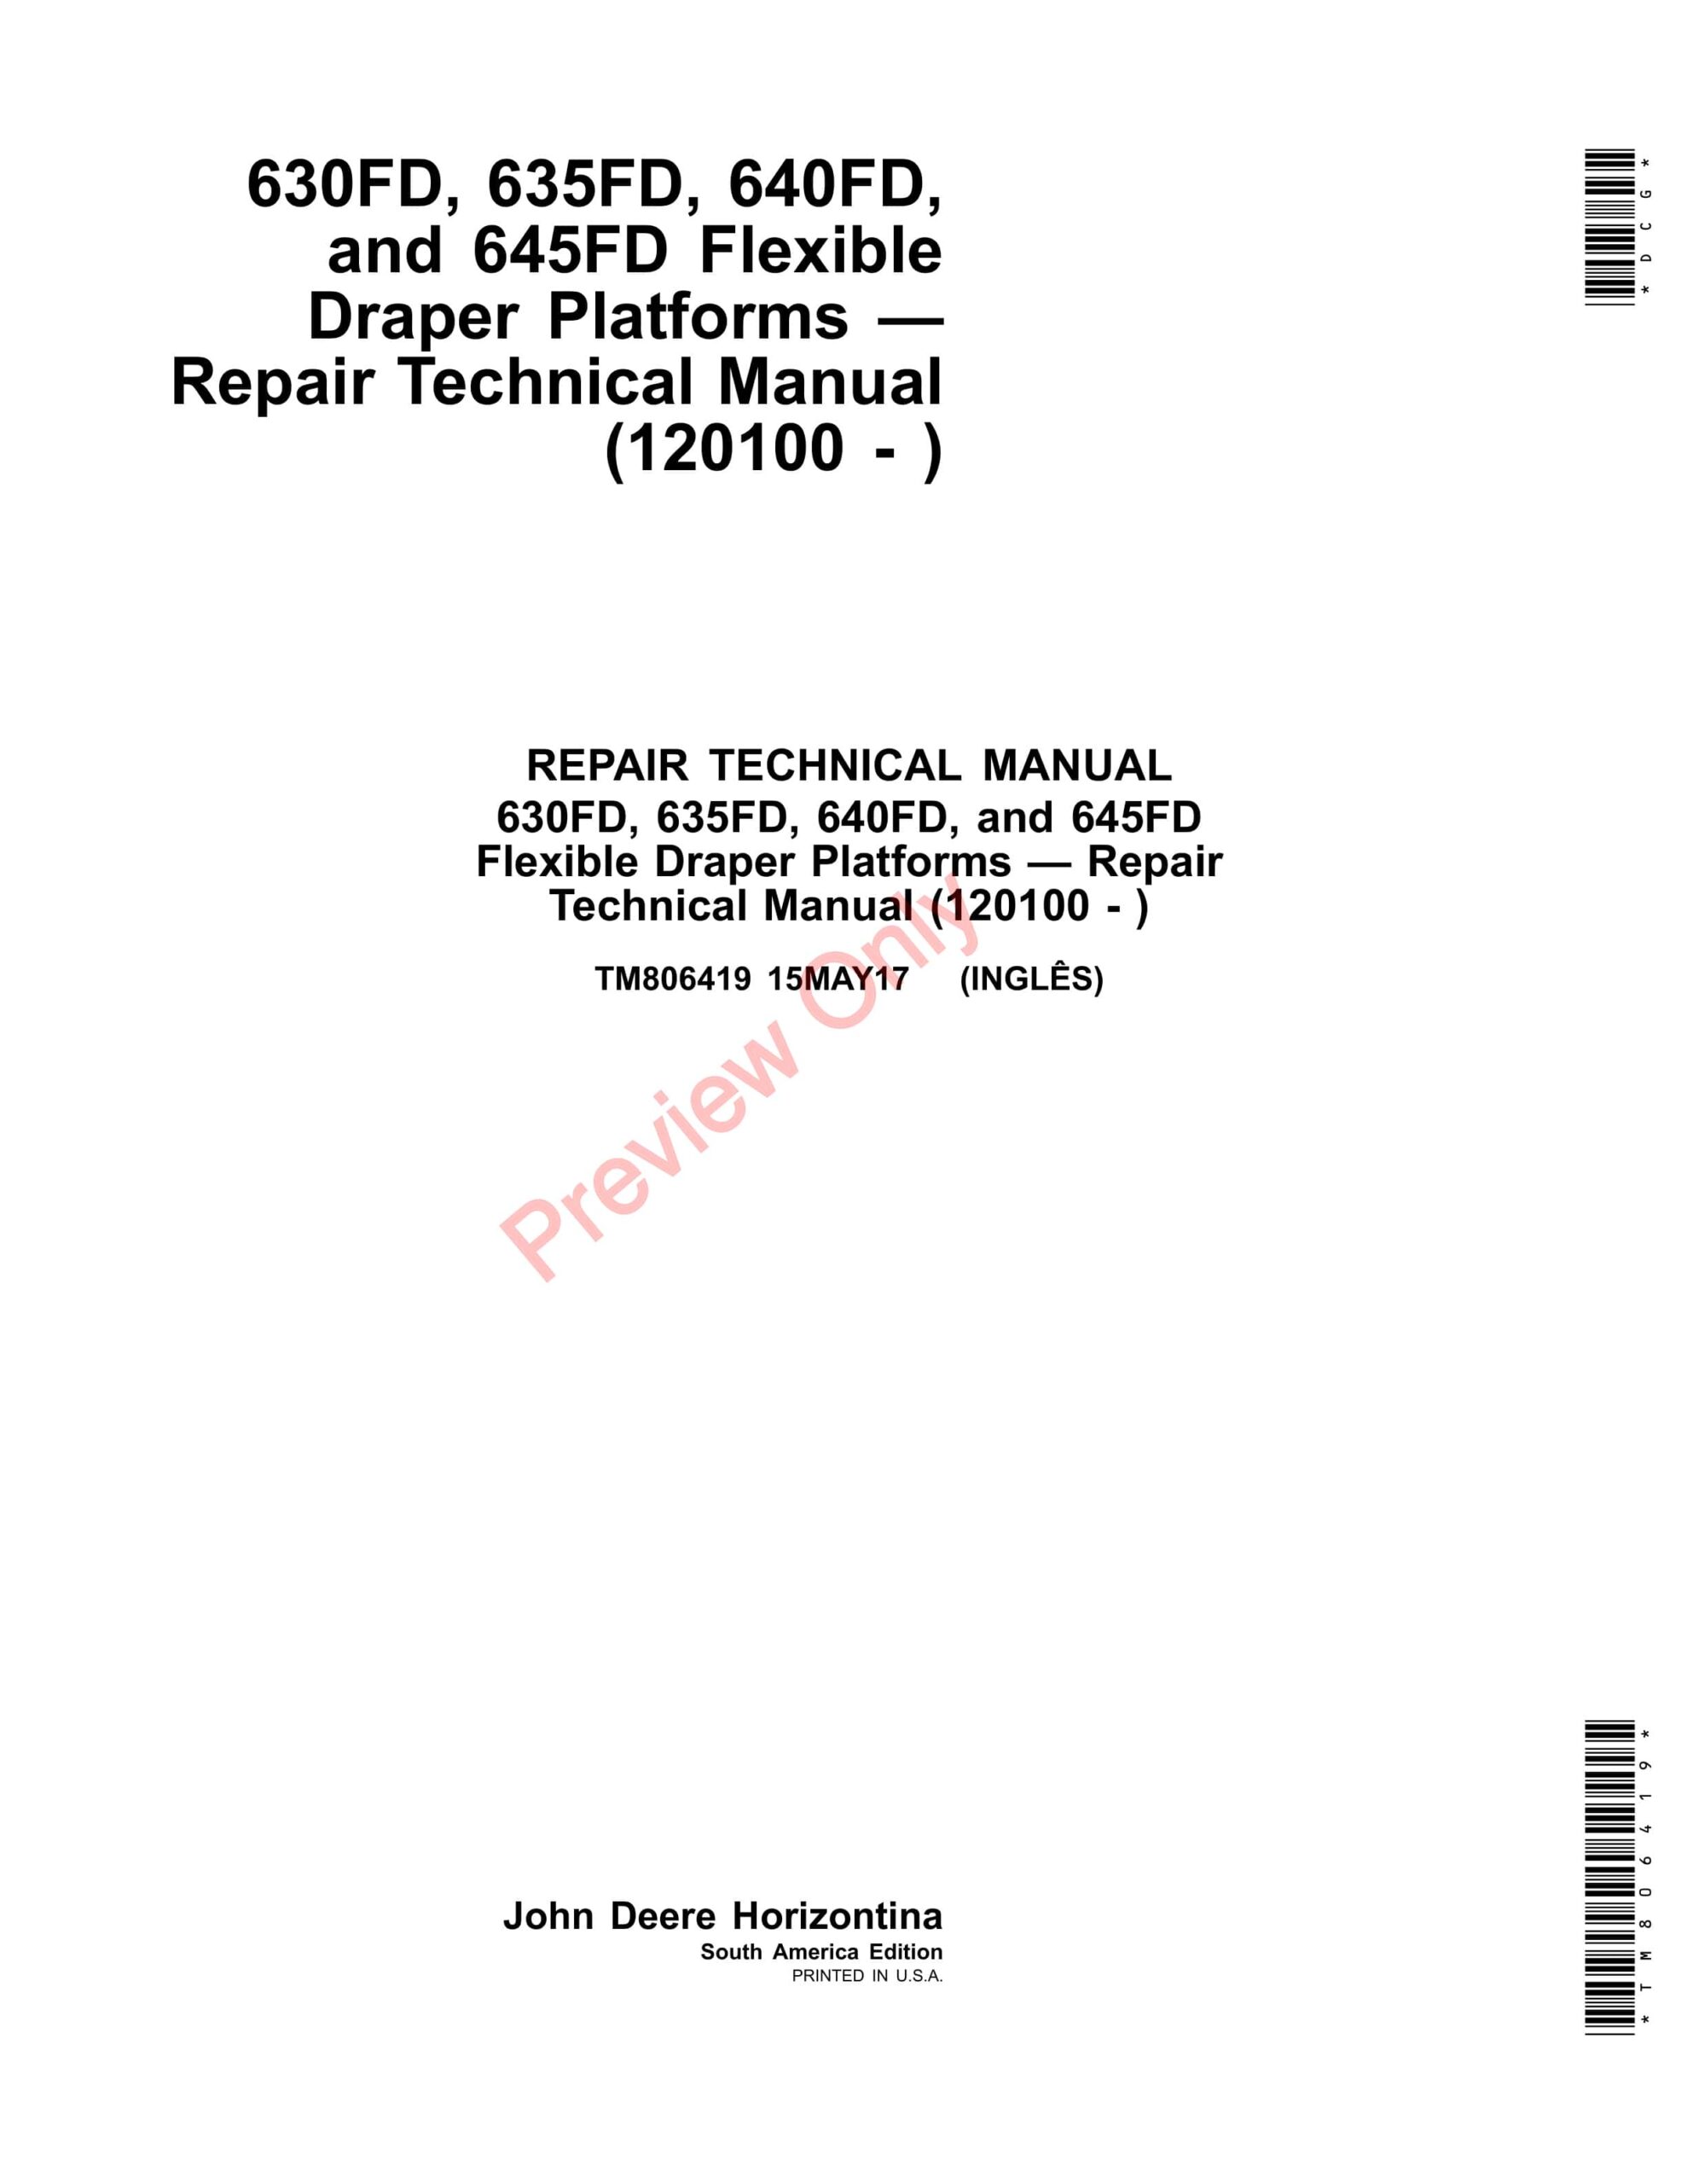 John Deere 630FD, 635FD, 640FD and 645FD Flexible Draper Platforms Repair Technical Manual TM806419 15MAY17-1